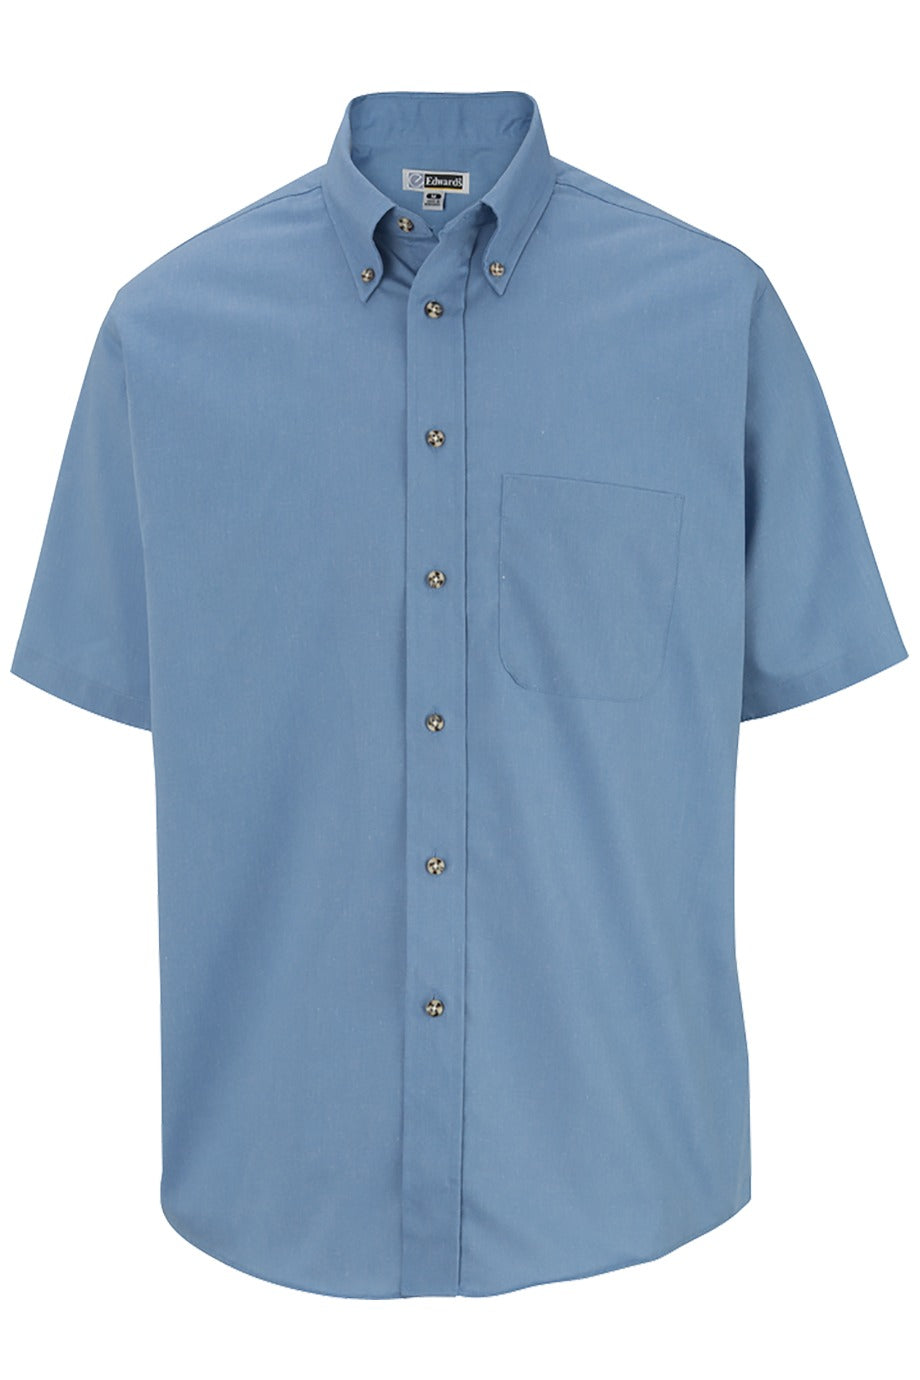 Edwards Men's Denim Blue Easy Care Short Sleeve Poplin Shirt